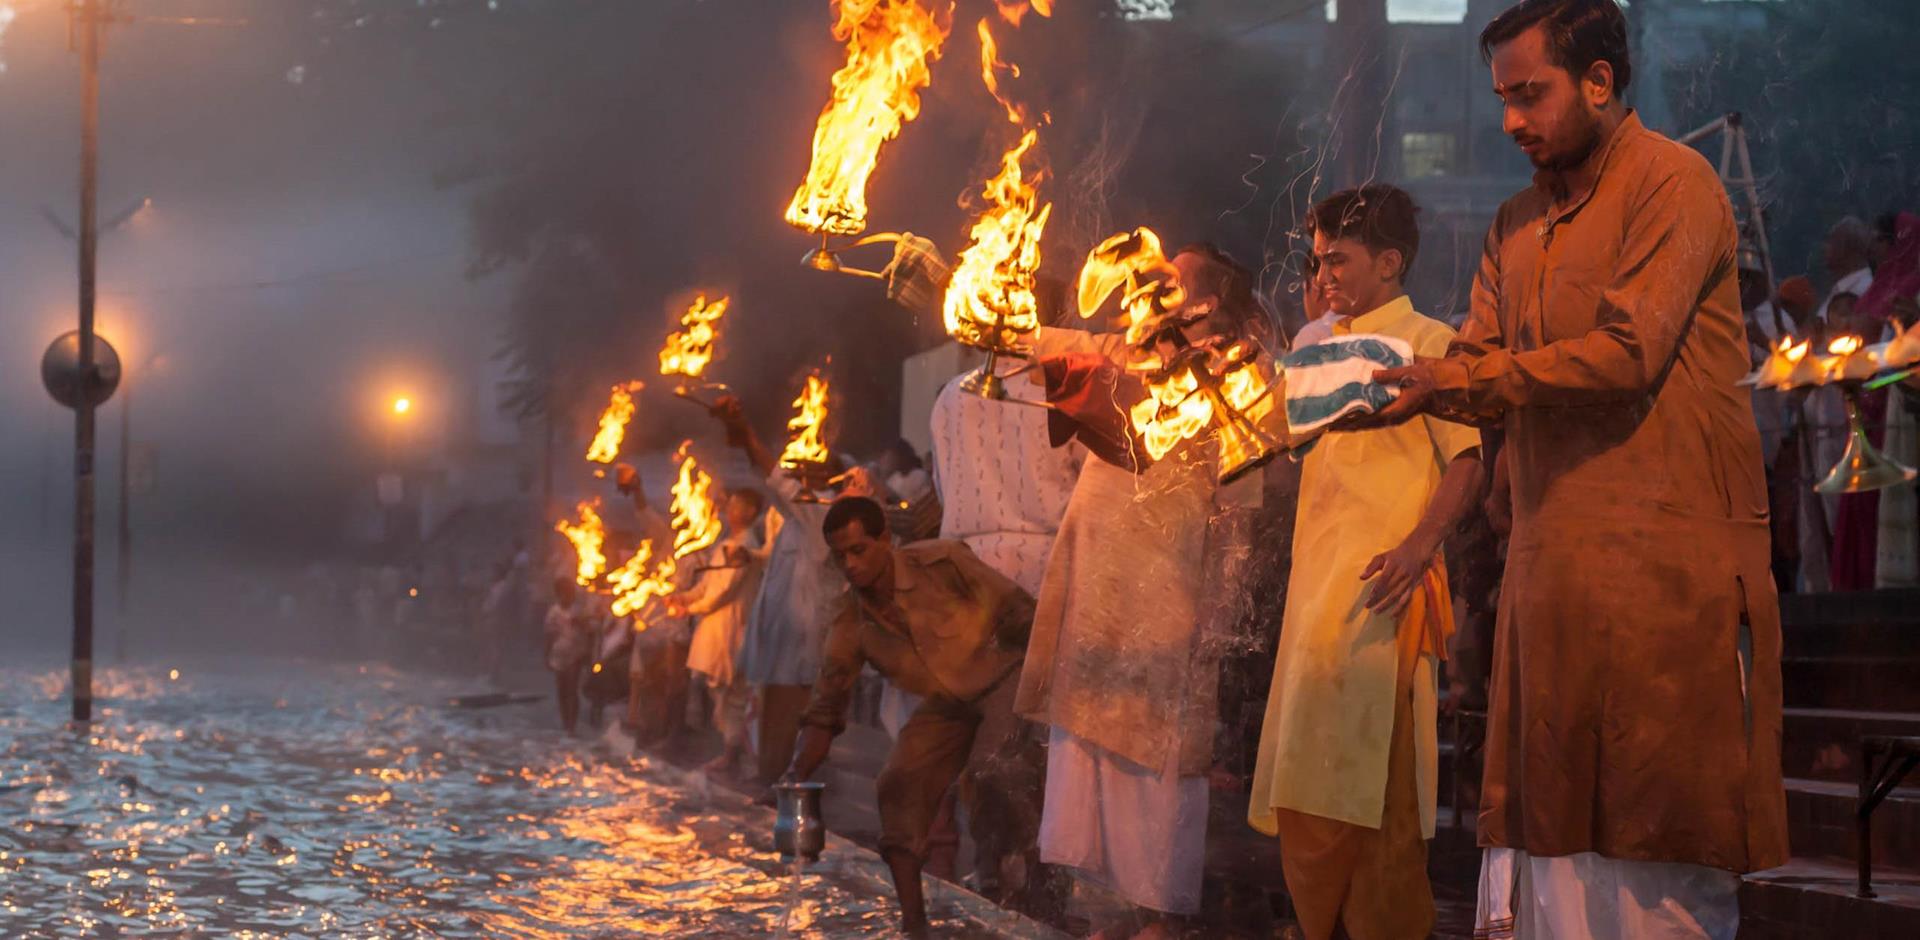 Witness the Ganga Aarti ceremony